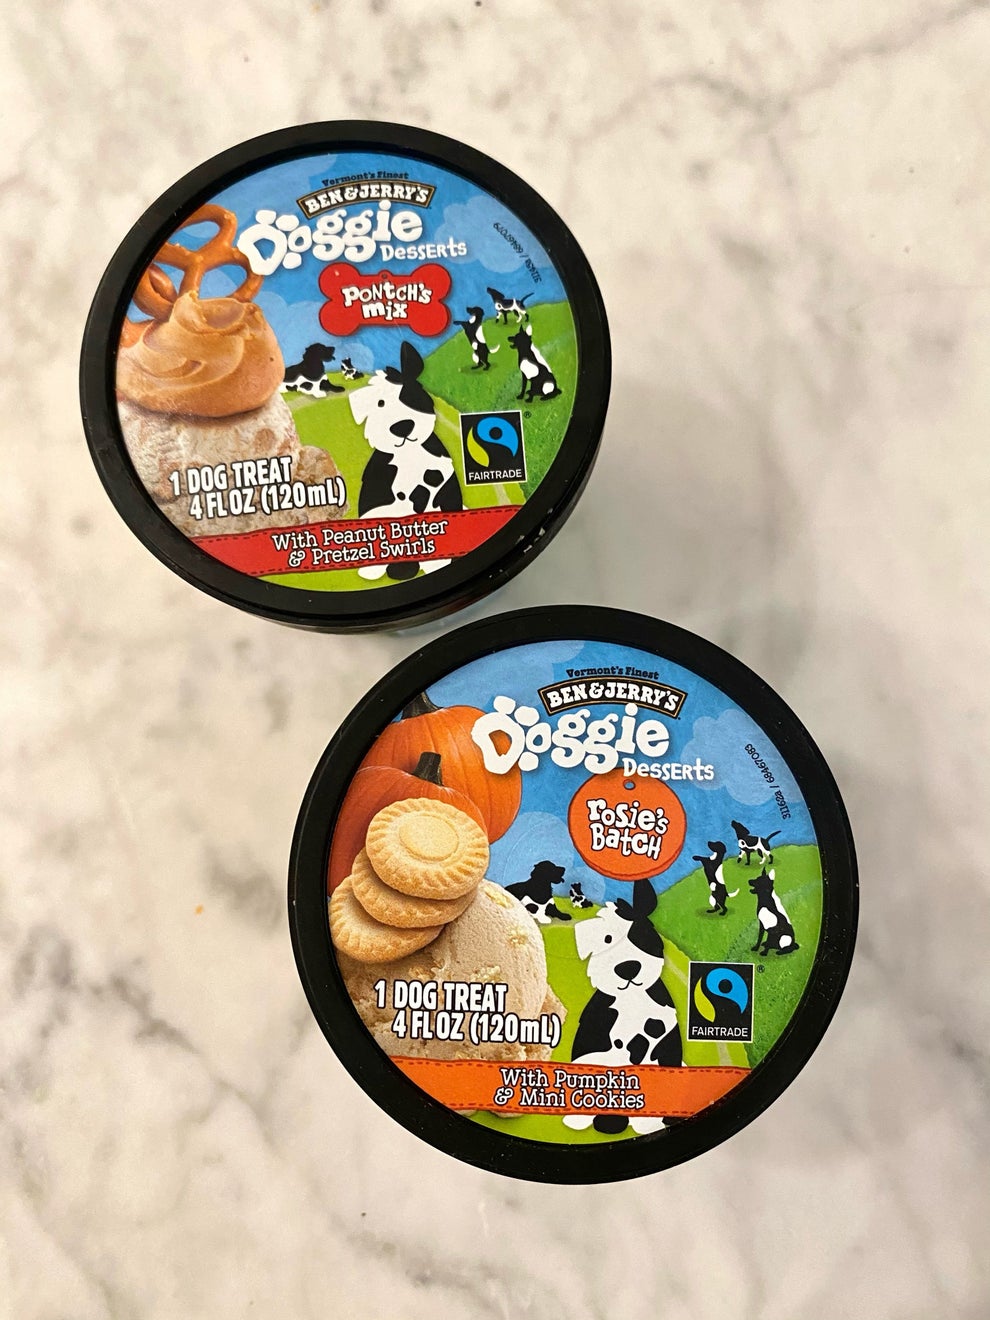 Ben & Jerry's Doggie Ice Cream: Reviews, Ratings, Ingredients